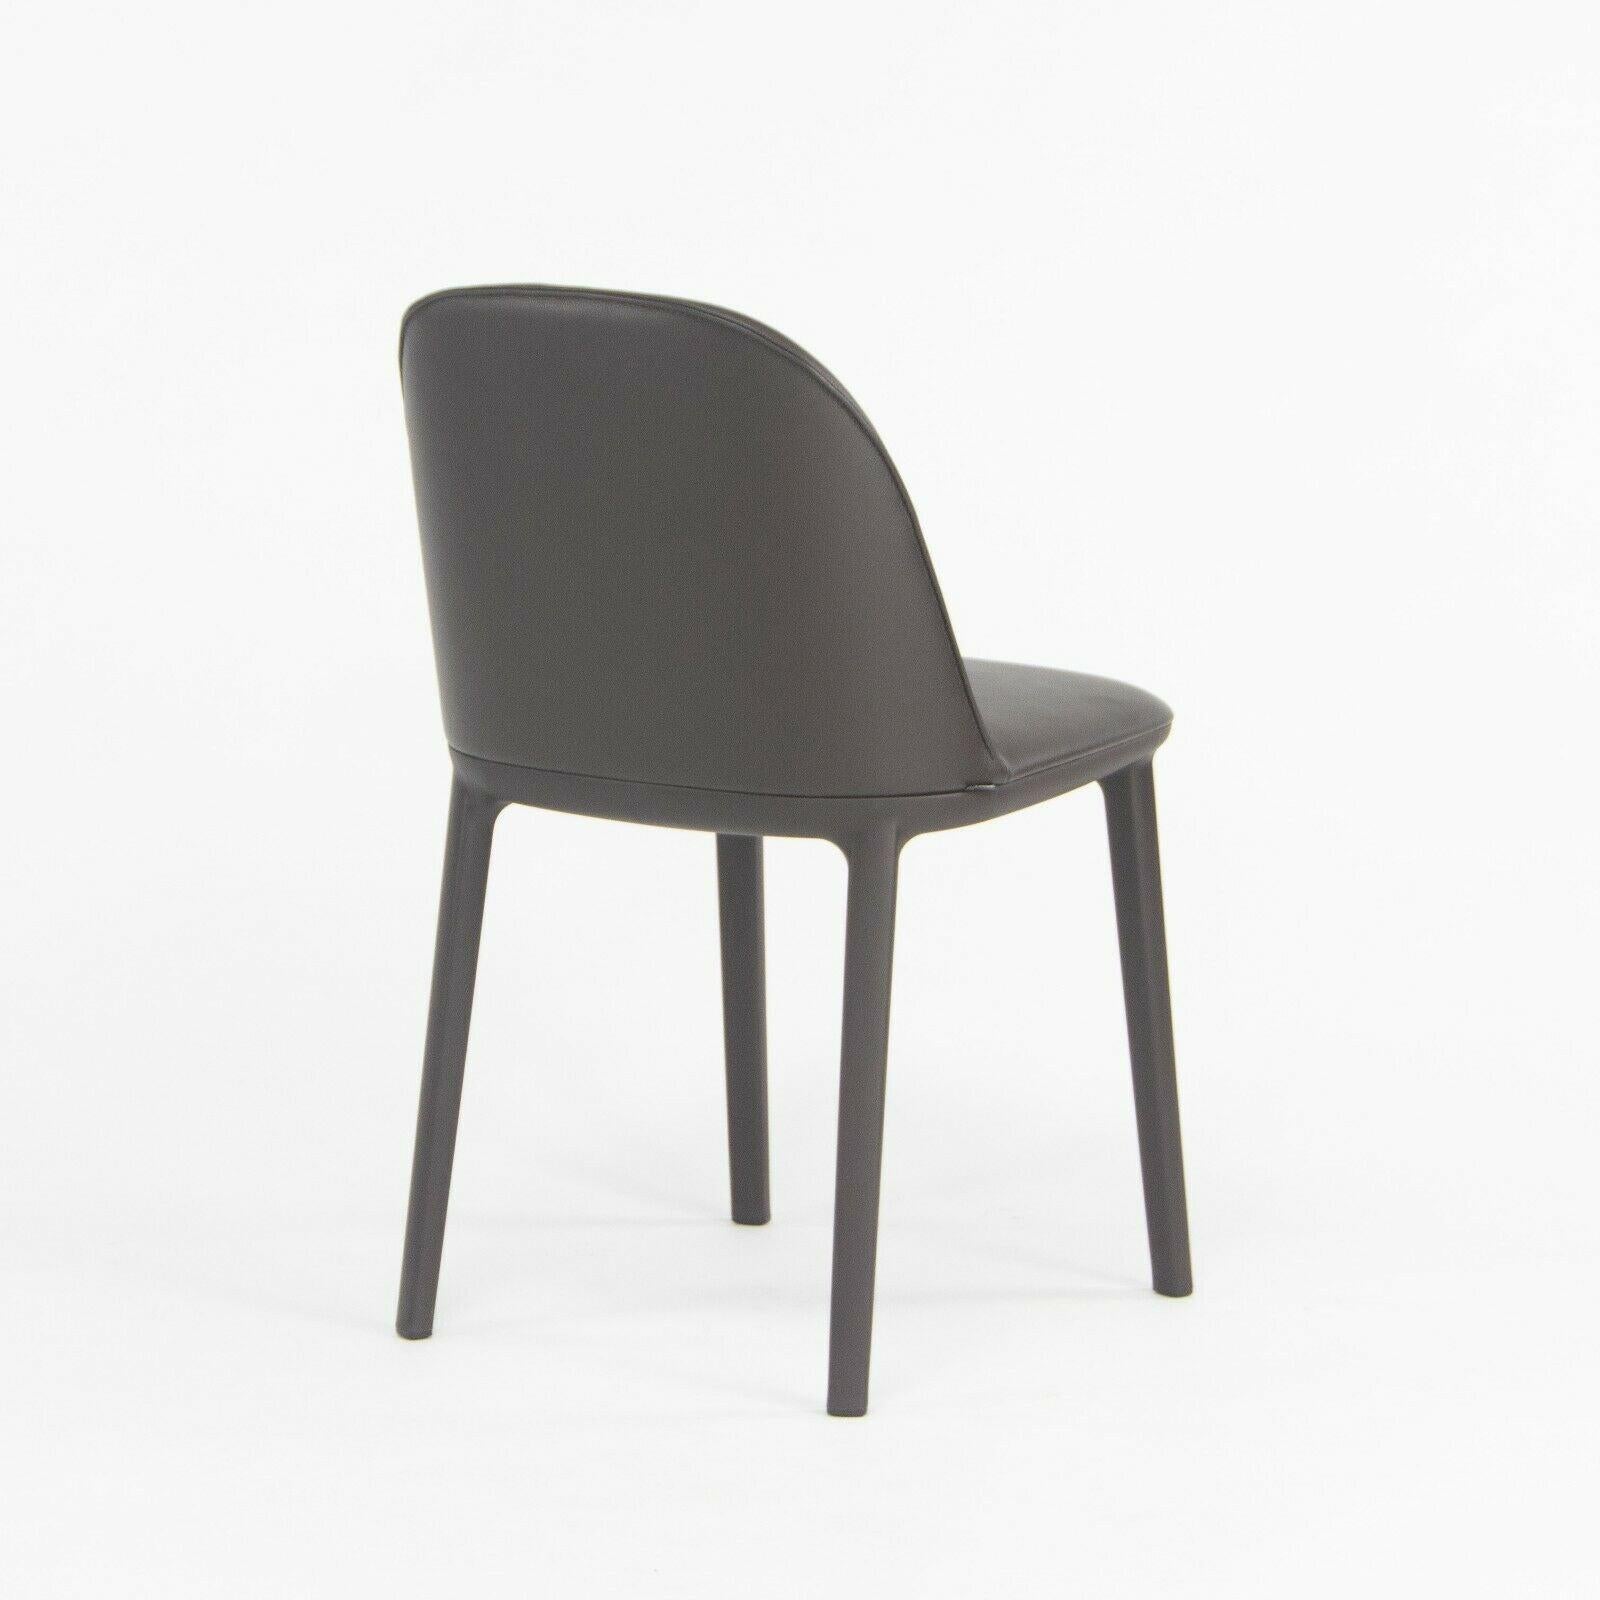 Cuir 2019 Vitra Softshell Side Chair w Dark Brown Leather by Ronan and Erwan Bouroullec en vente